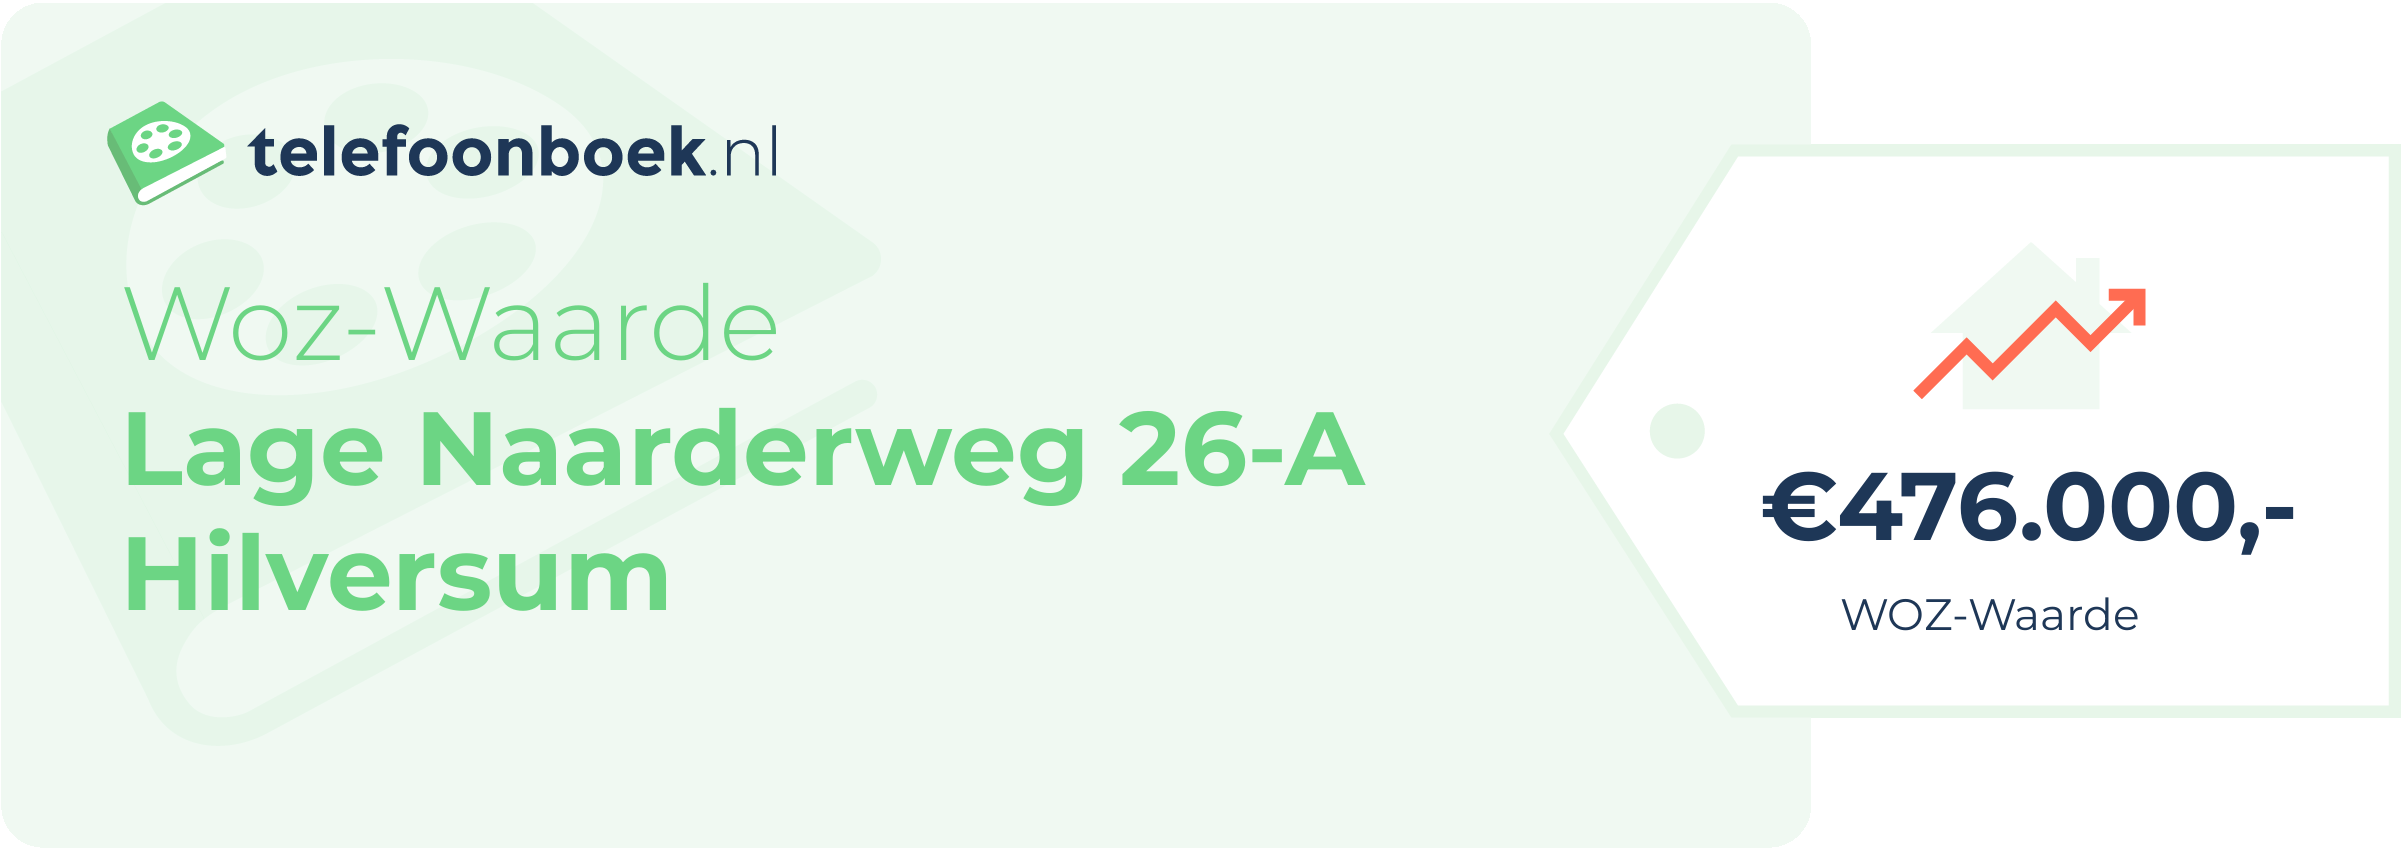 WOZ-waarde Lage Naarderweg 26-A Hilversum